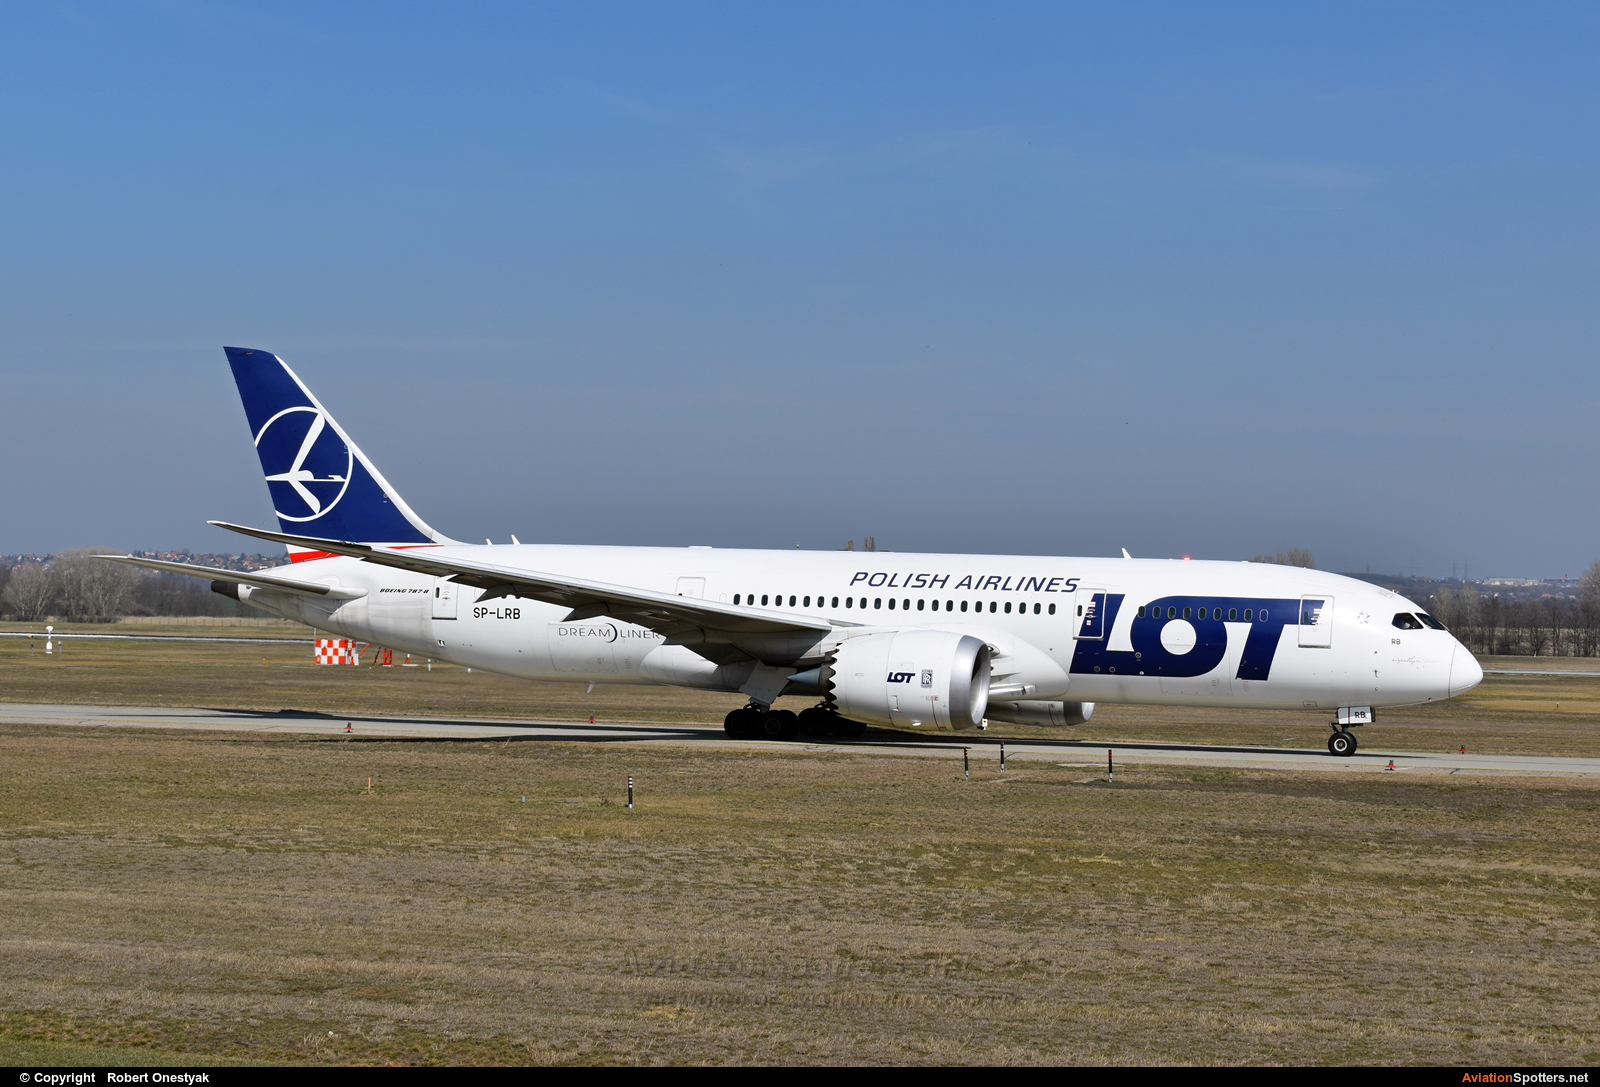 LOT - Polish Airlines  -  787-8 Dreamliner  (SP-LRB) By Robert Onestyak (Robert.814)